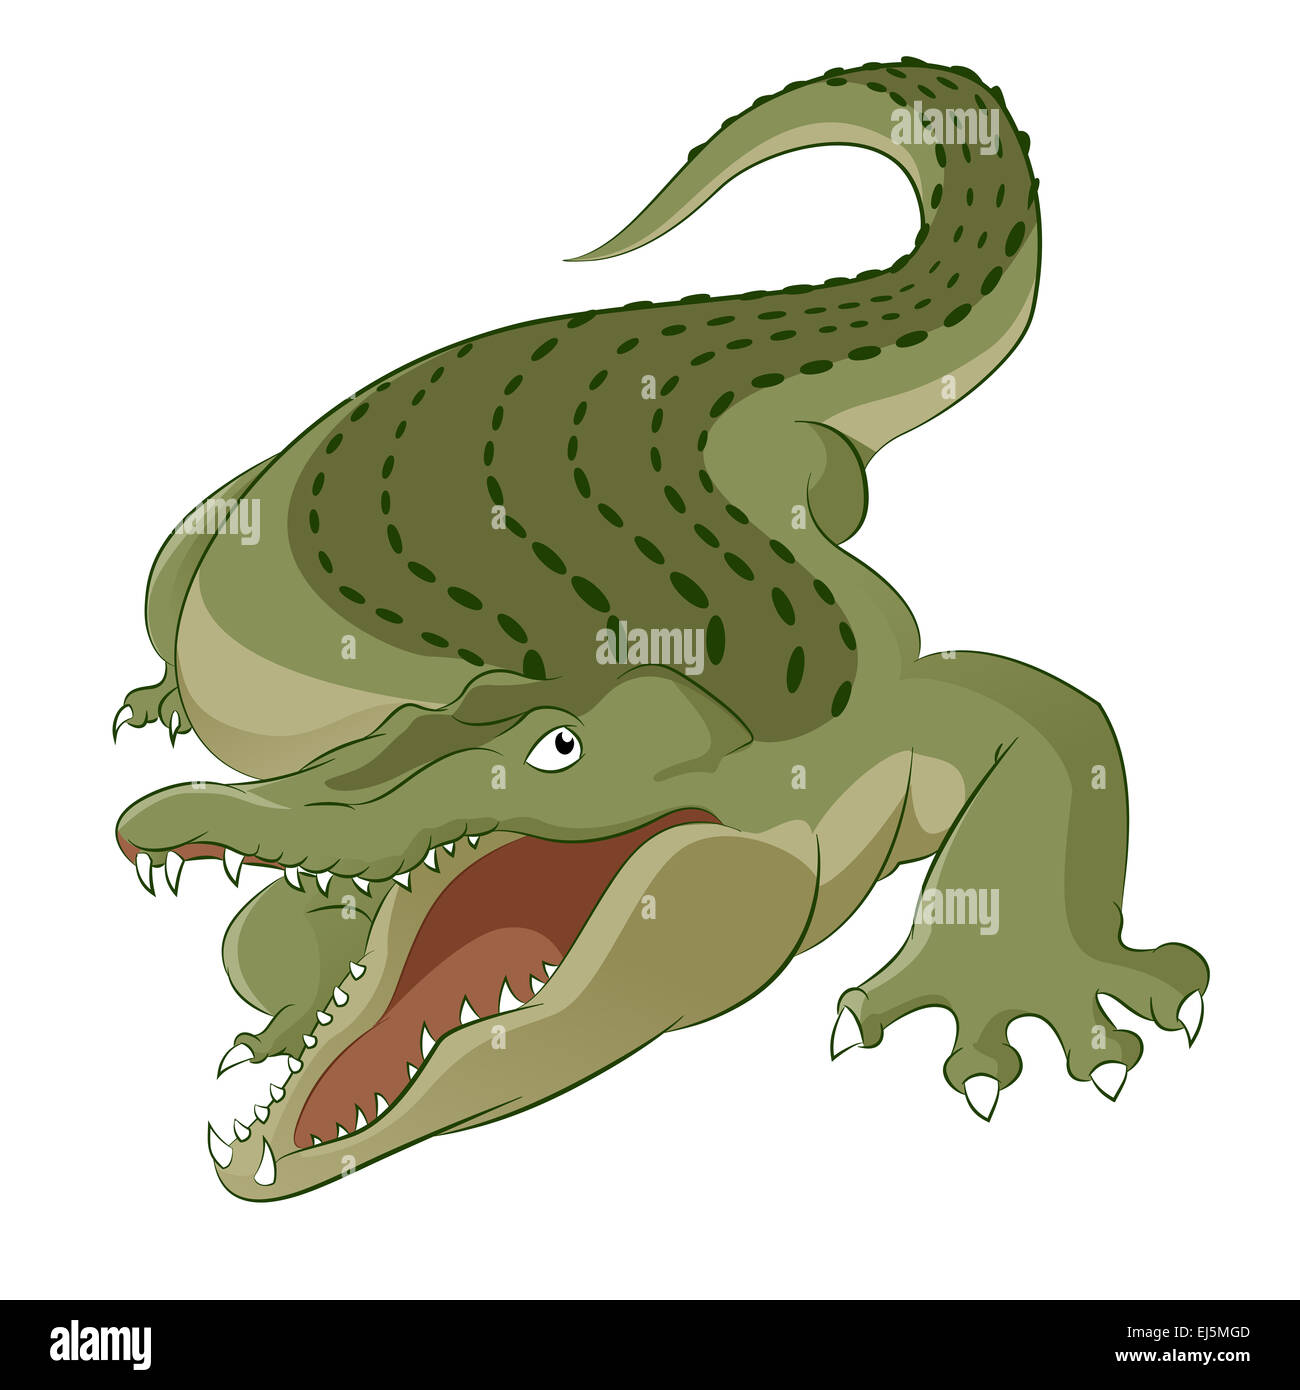 Cartoon vector image de crocodile grand faim Banque D'Images